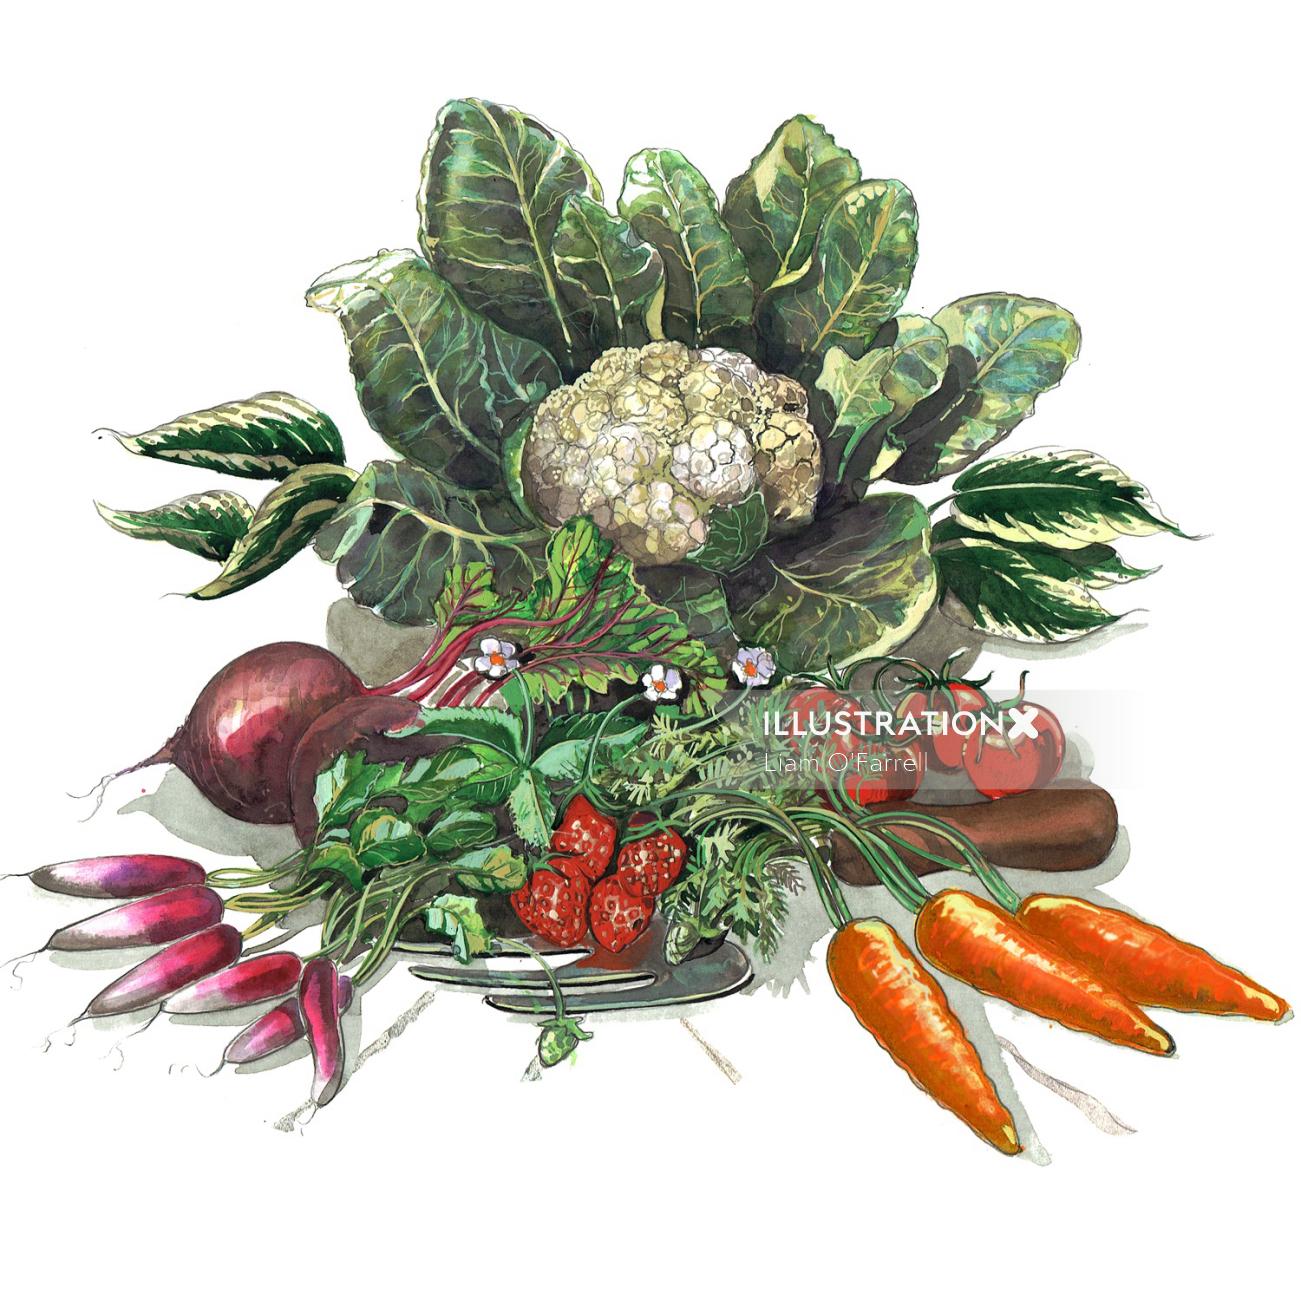 Vegetables watercolor painting